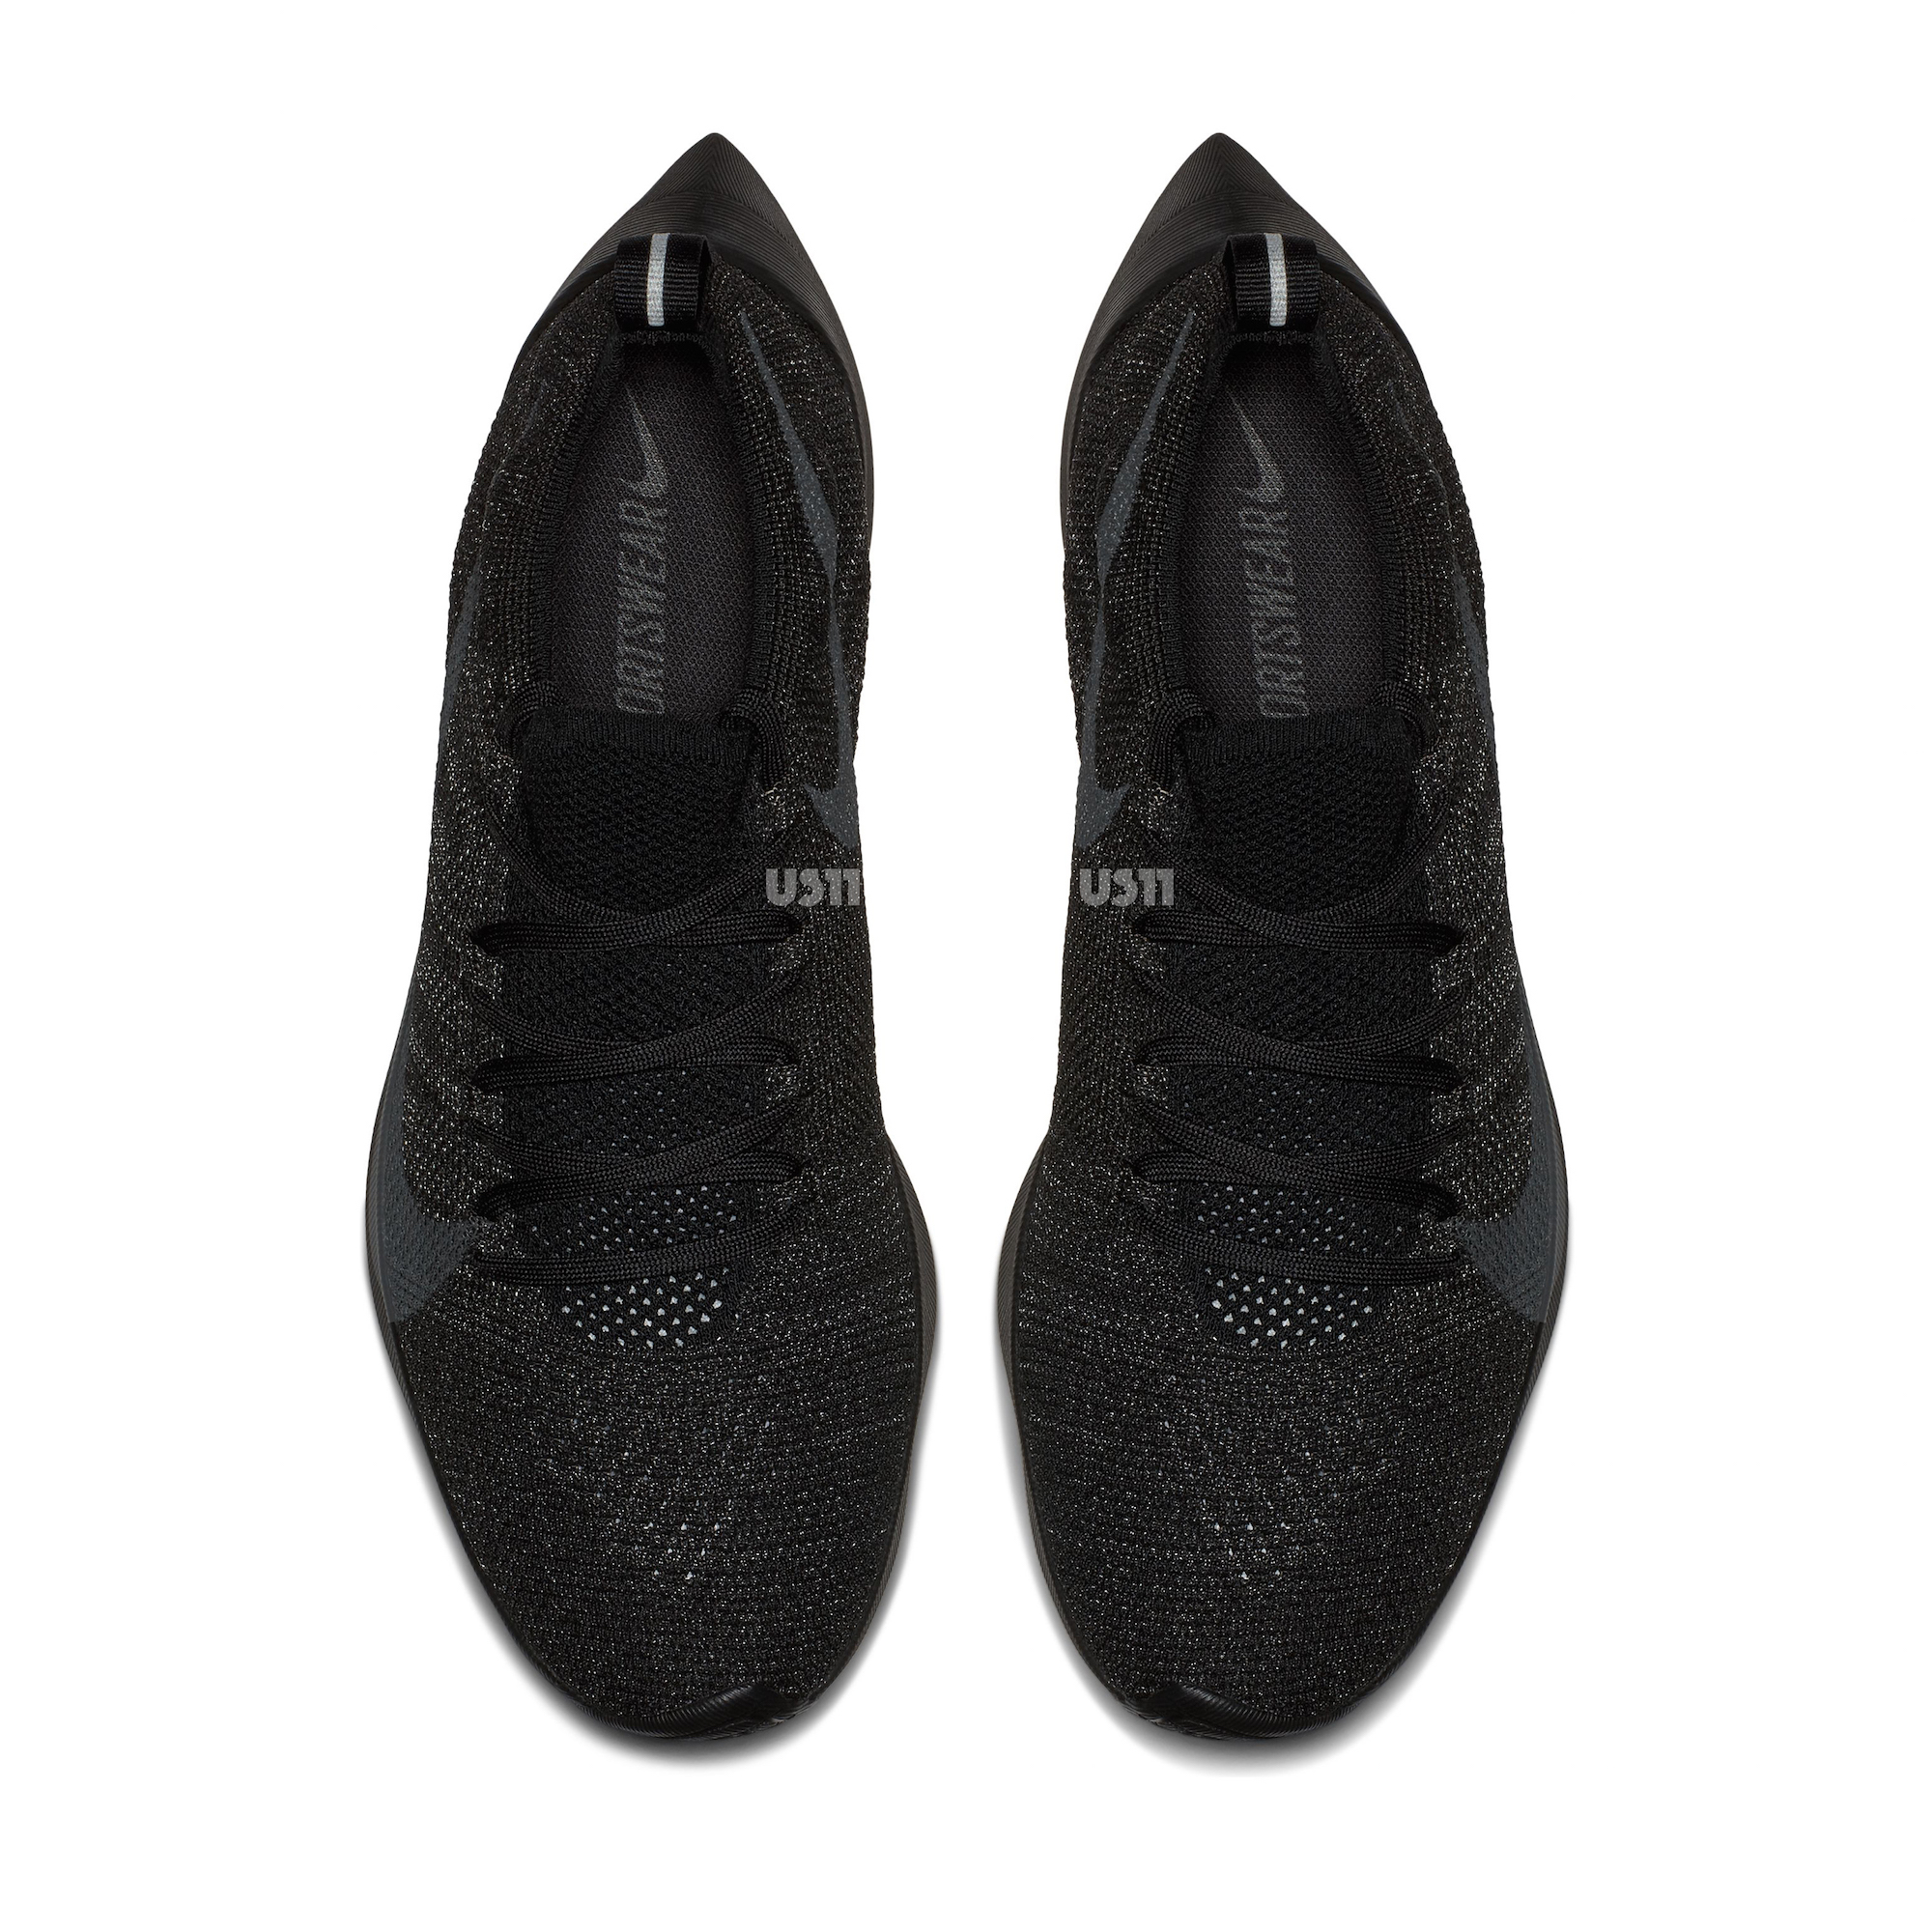 Nike Vapor Street Flyknit black 2